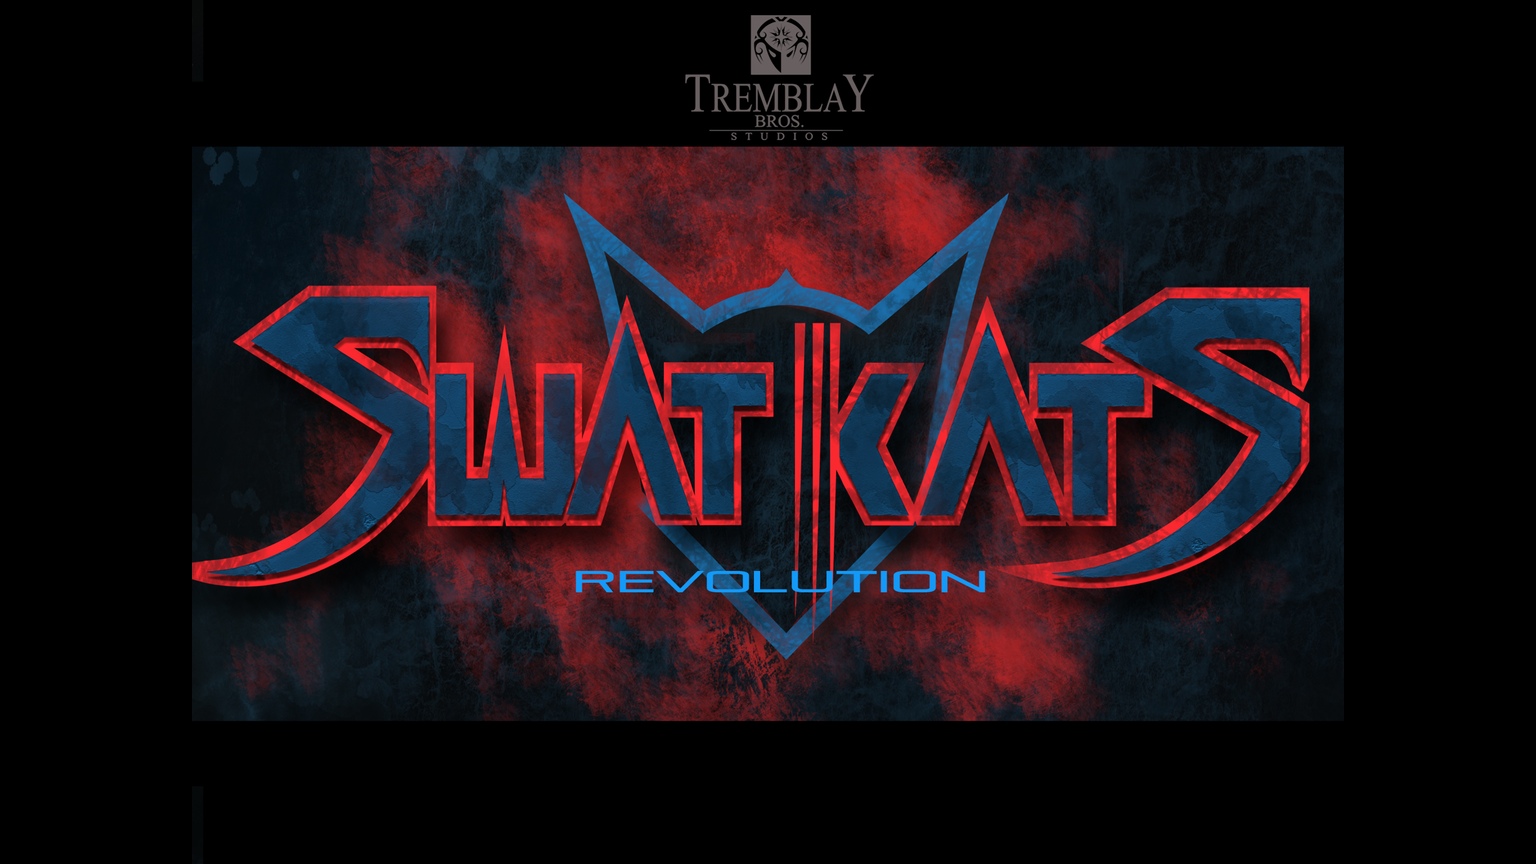 SWAT-KATS REVOLUTION by TREMBLAY BROS STUDIOS — Kickstarter